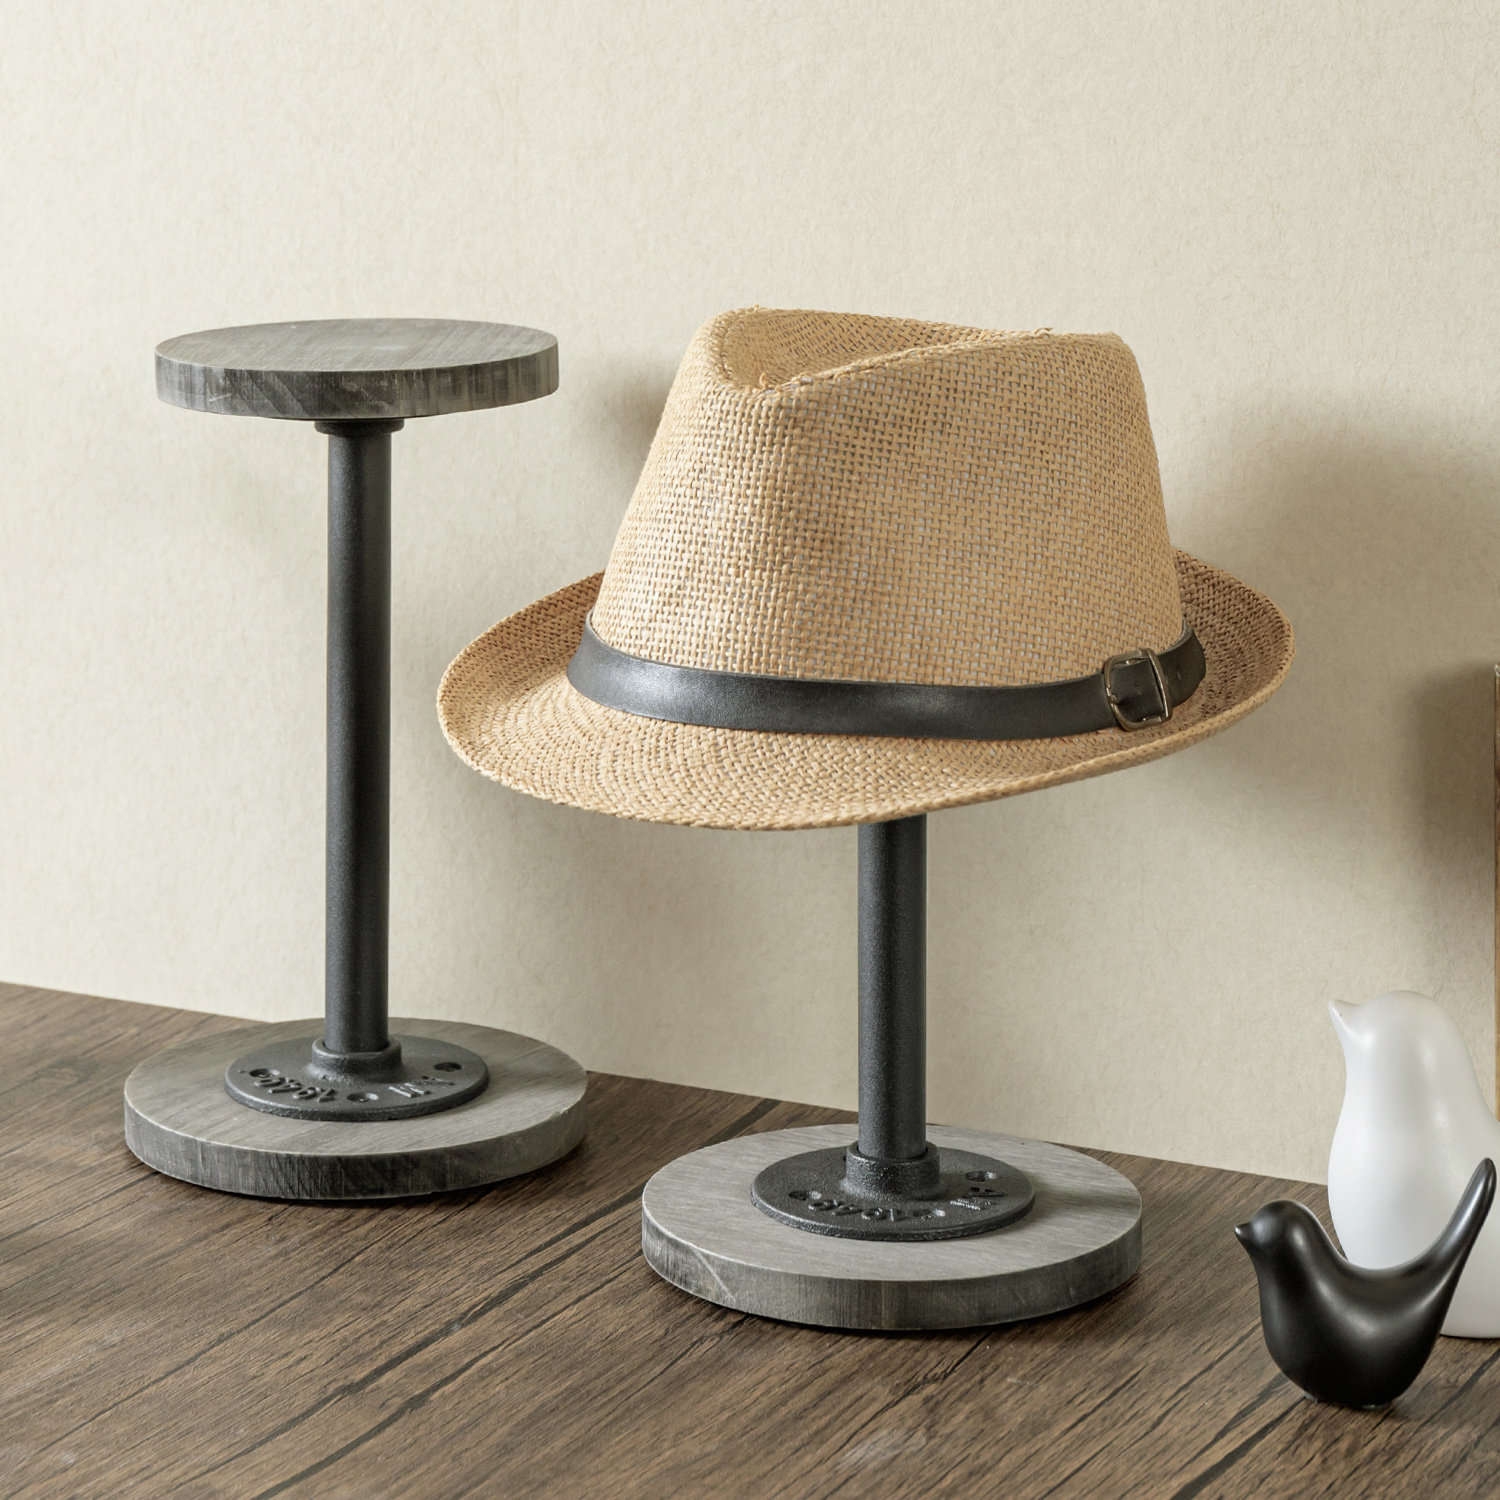 Tabletop Black Metal Hat Holder Rack, Modern Wig/Cap Display Stand, Set of 2